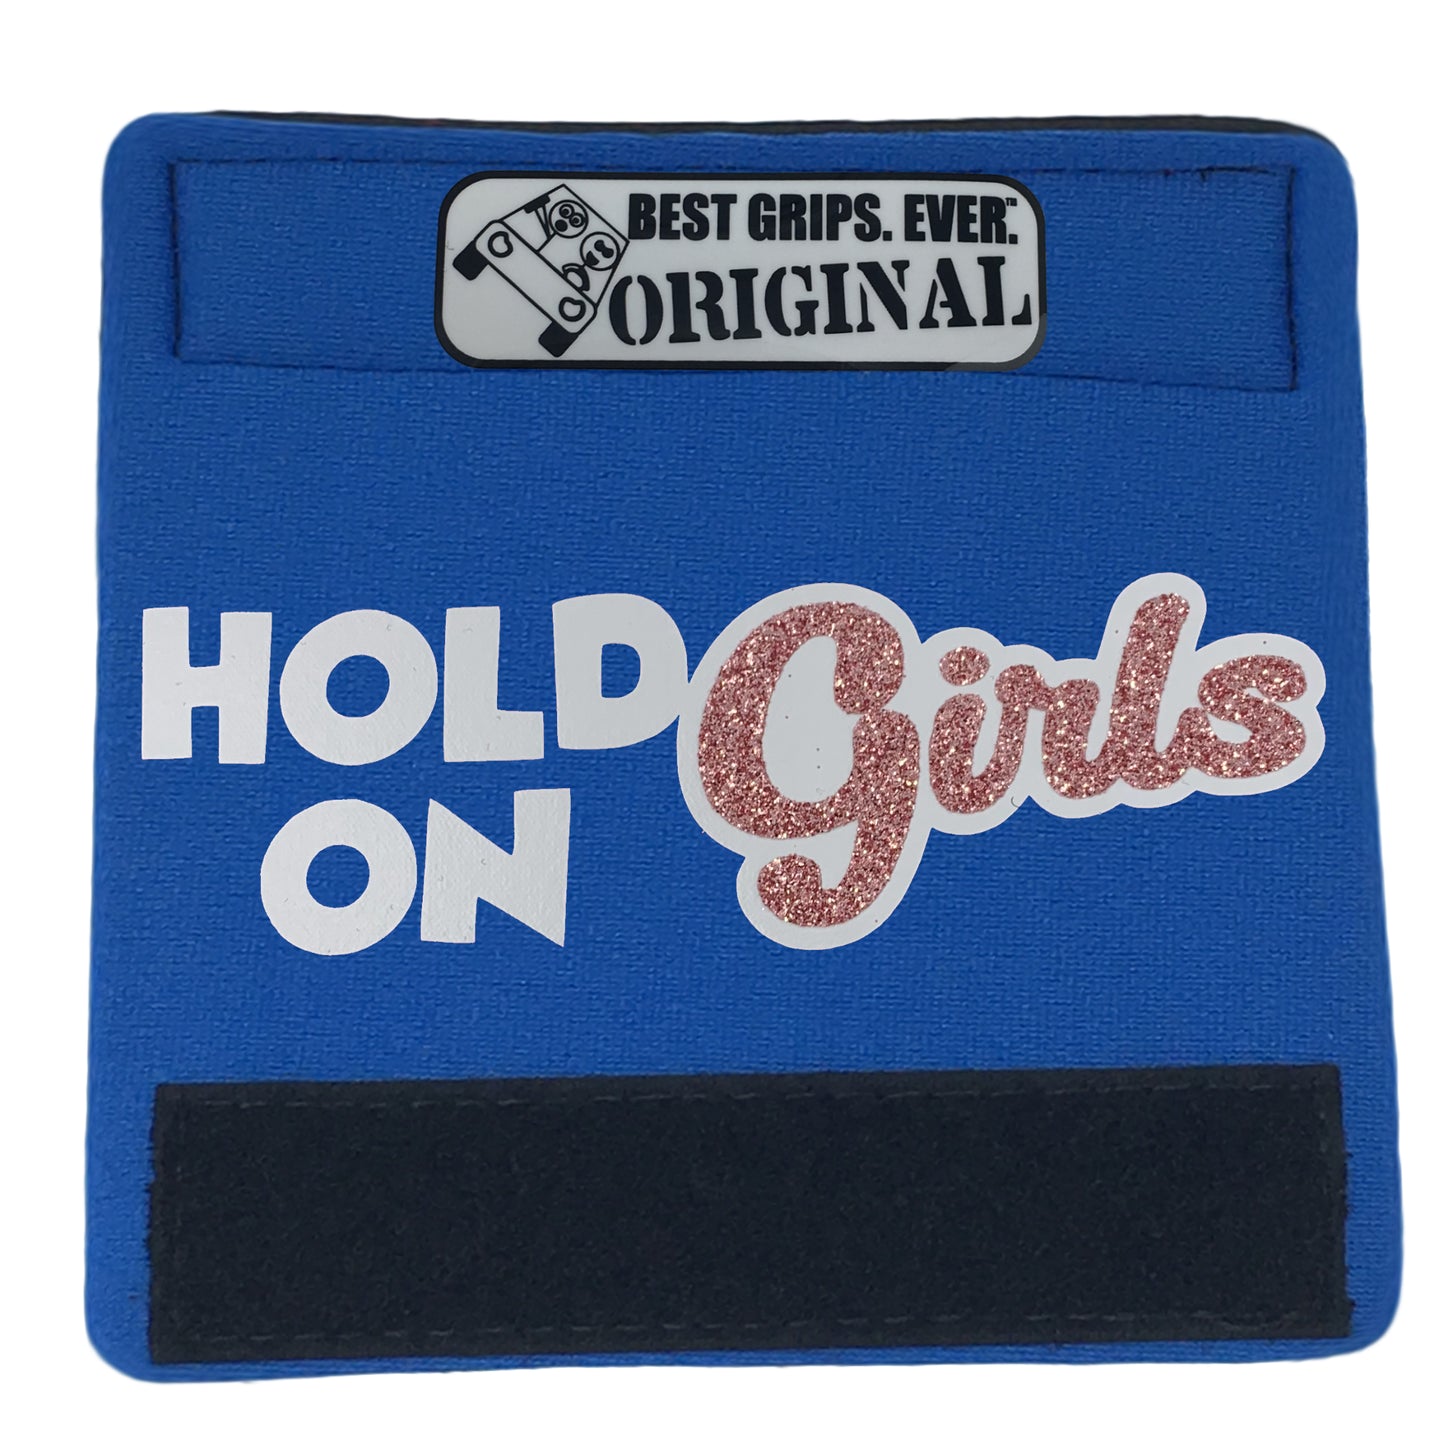 The Girls Grip. - BEST GRIPS. EVER.®